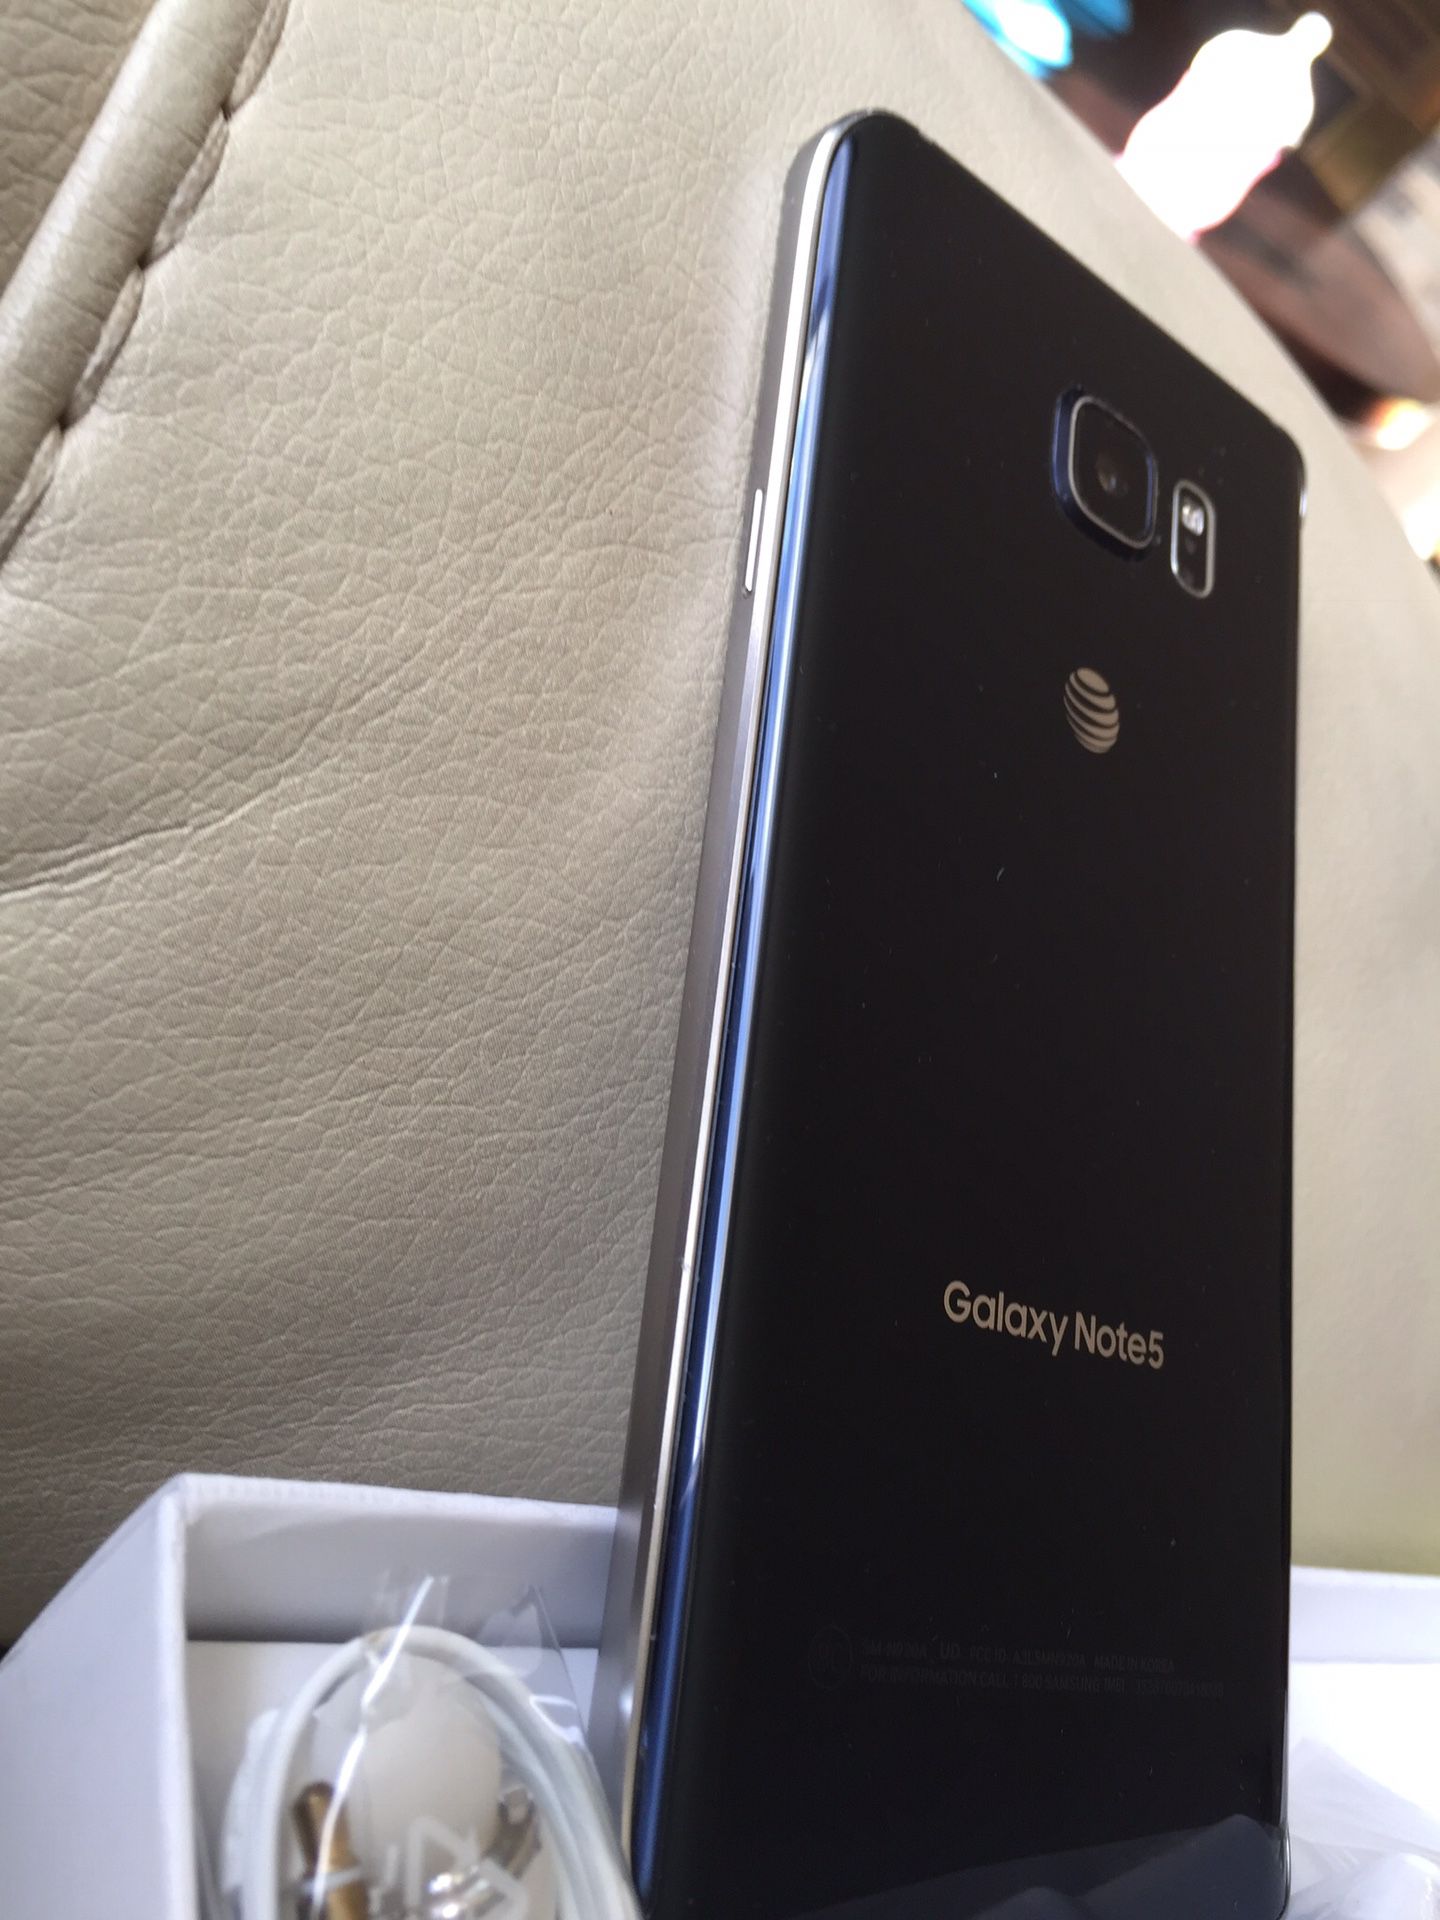 Samsung Galaxy note 5,32 GB, excellent condition factory unlocked